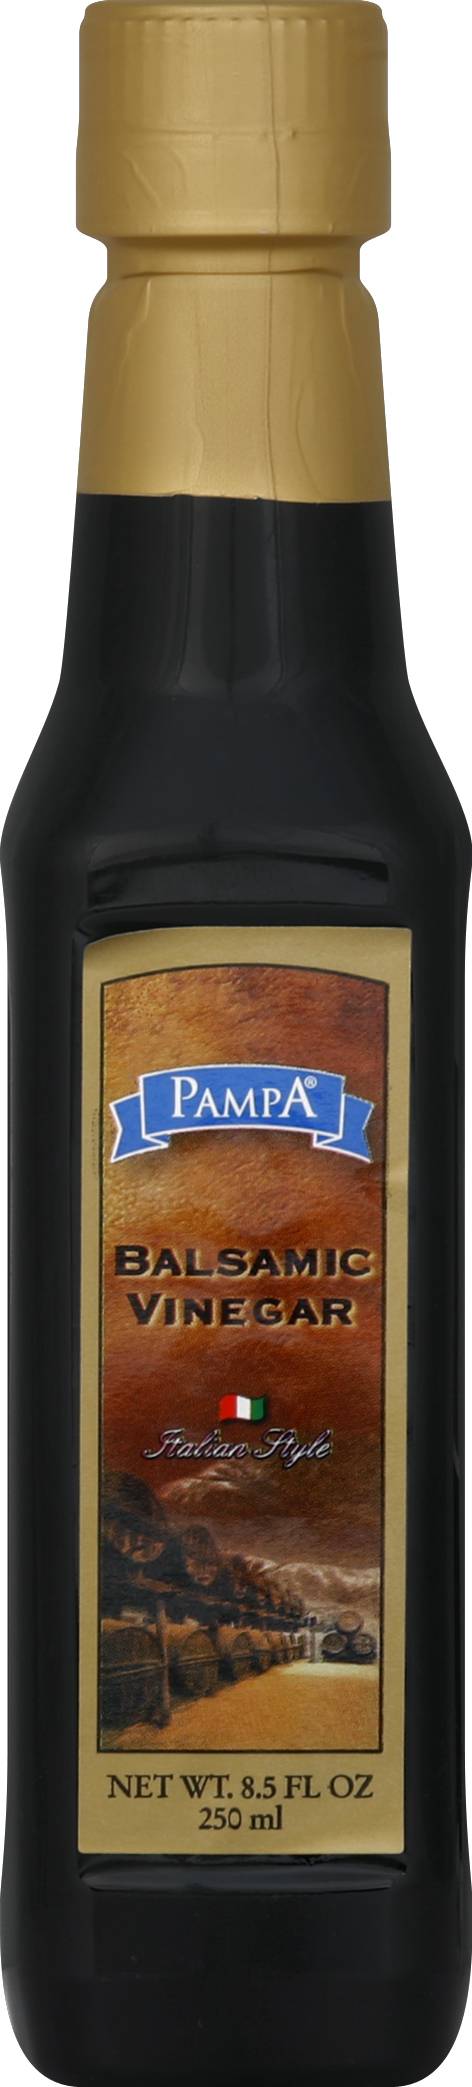 Pampa Balsamic Vinegar